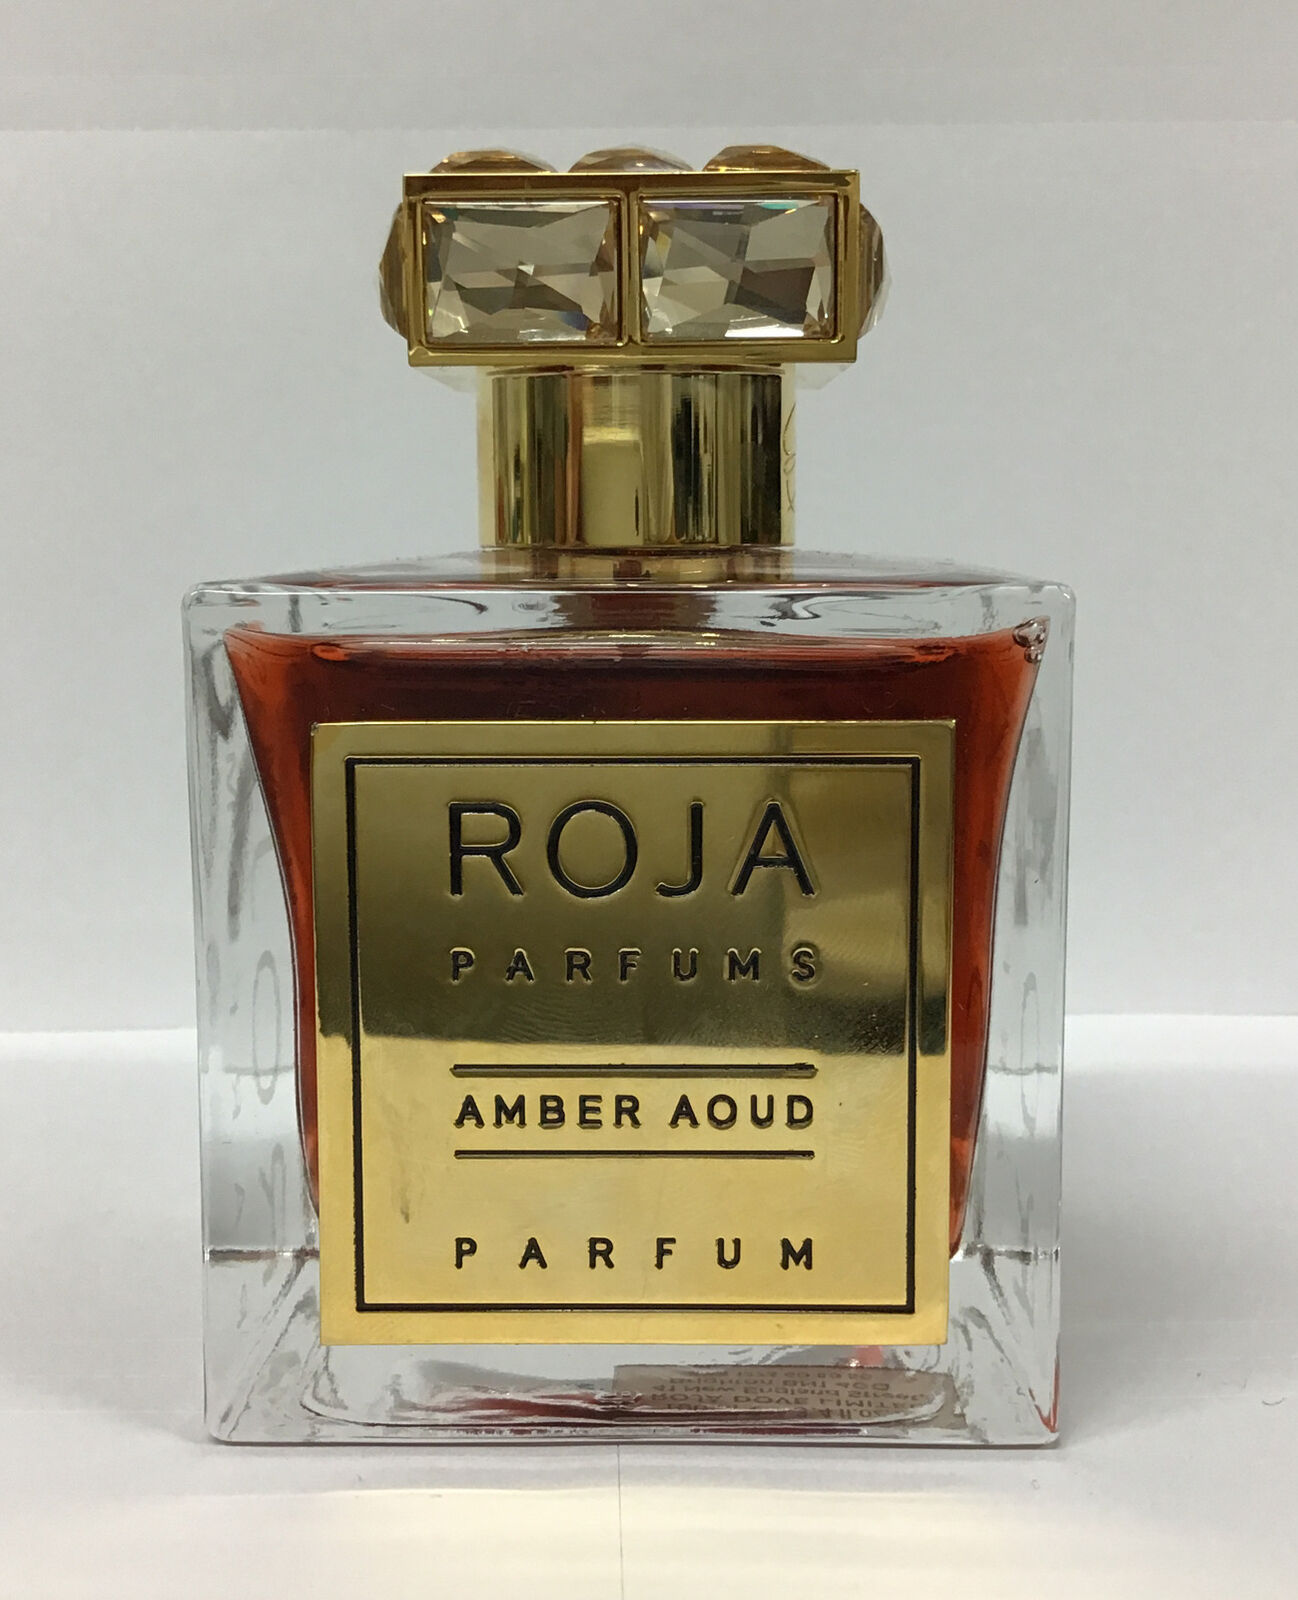 Roja Amber Aoud Eau De Parfum Spray 3.4 Fl Oz, As Pictured. No Box